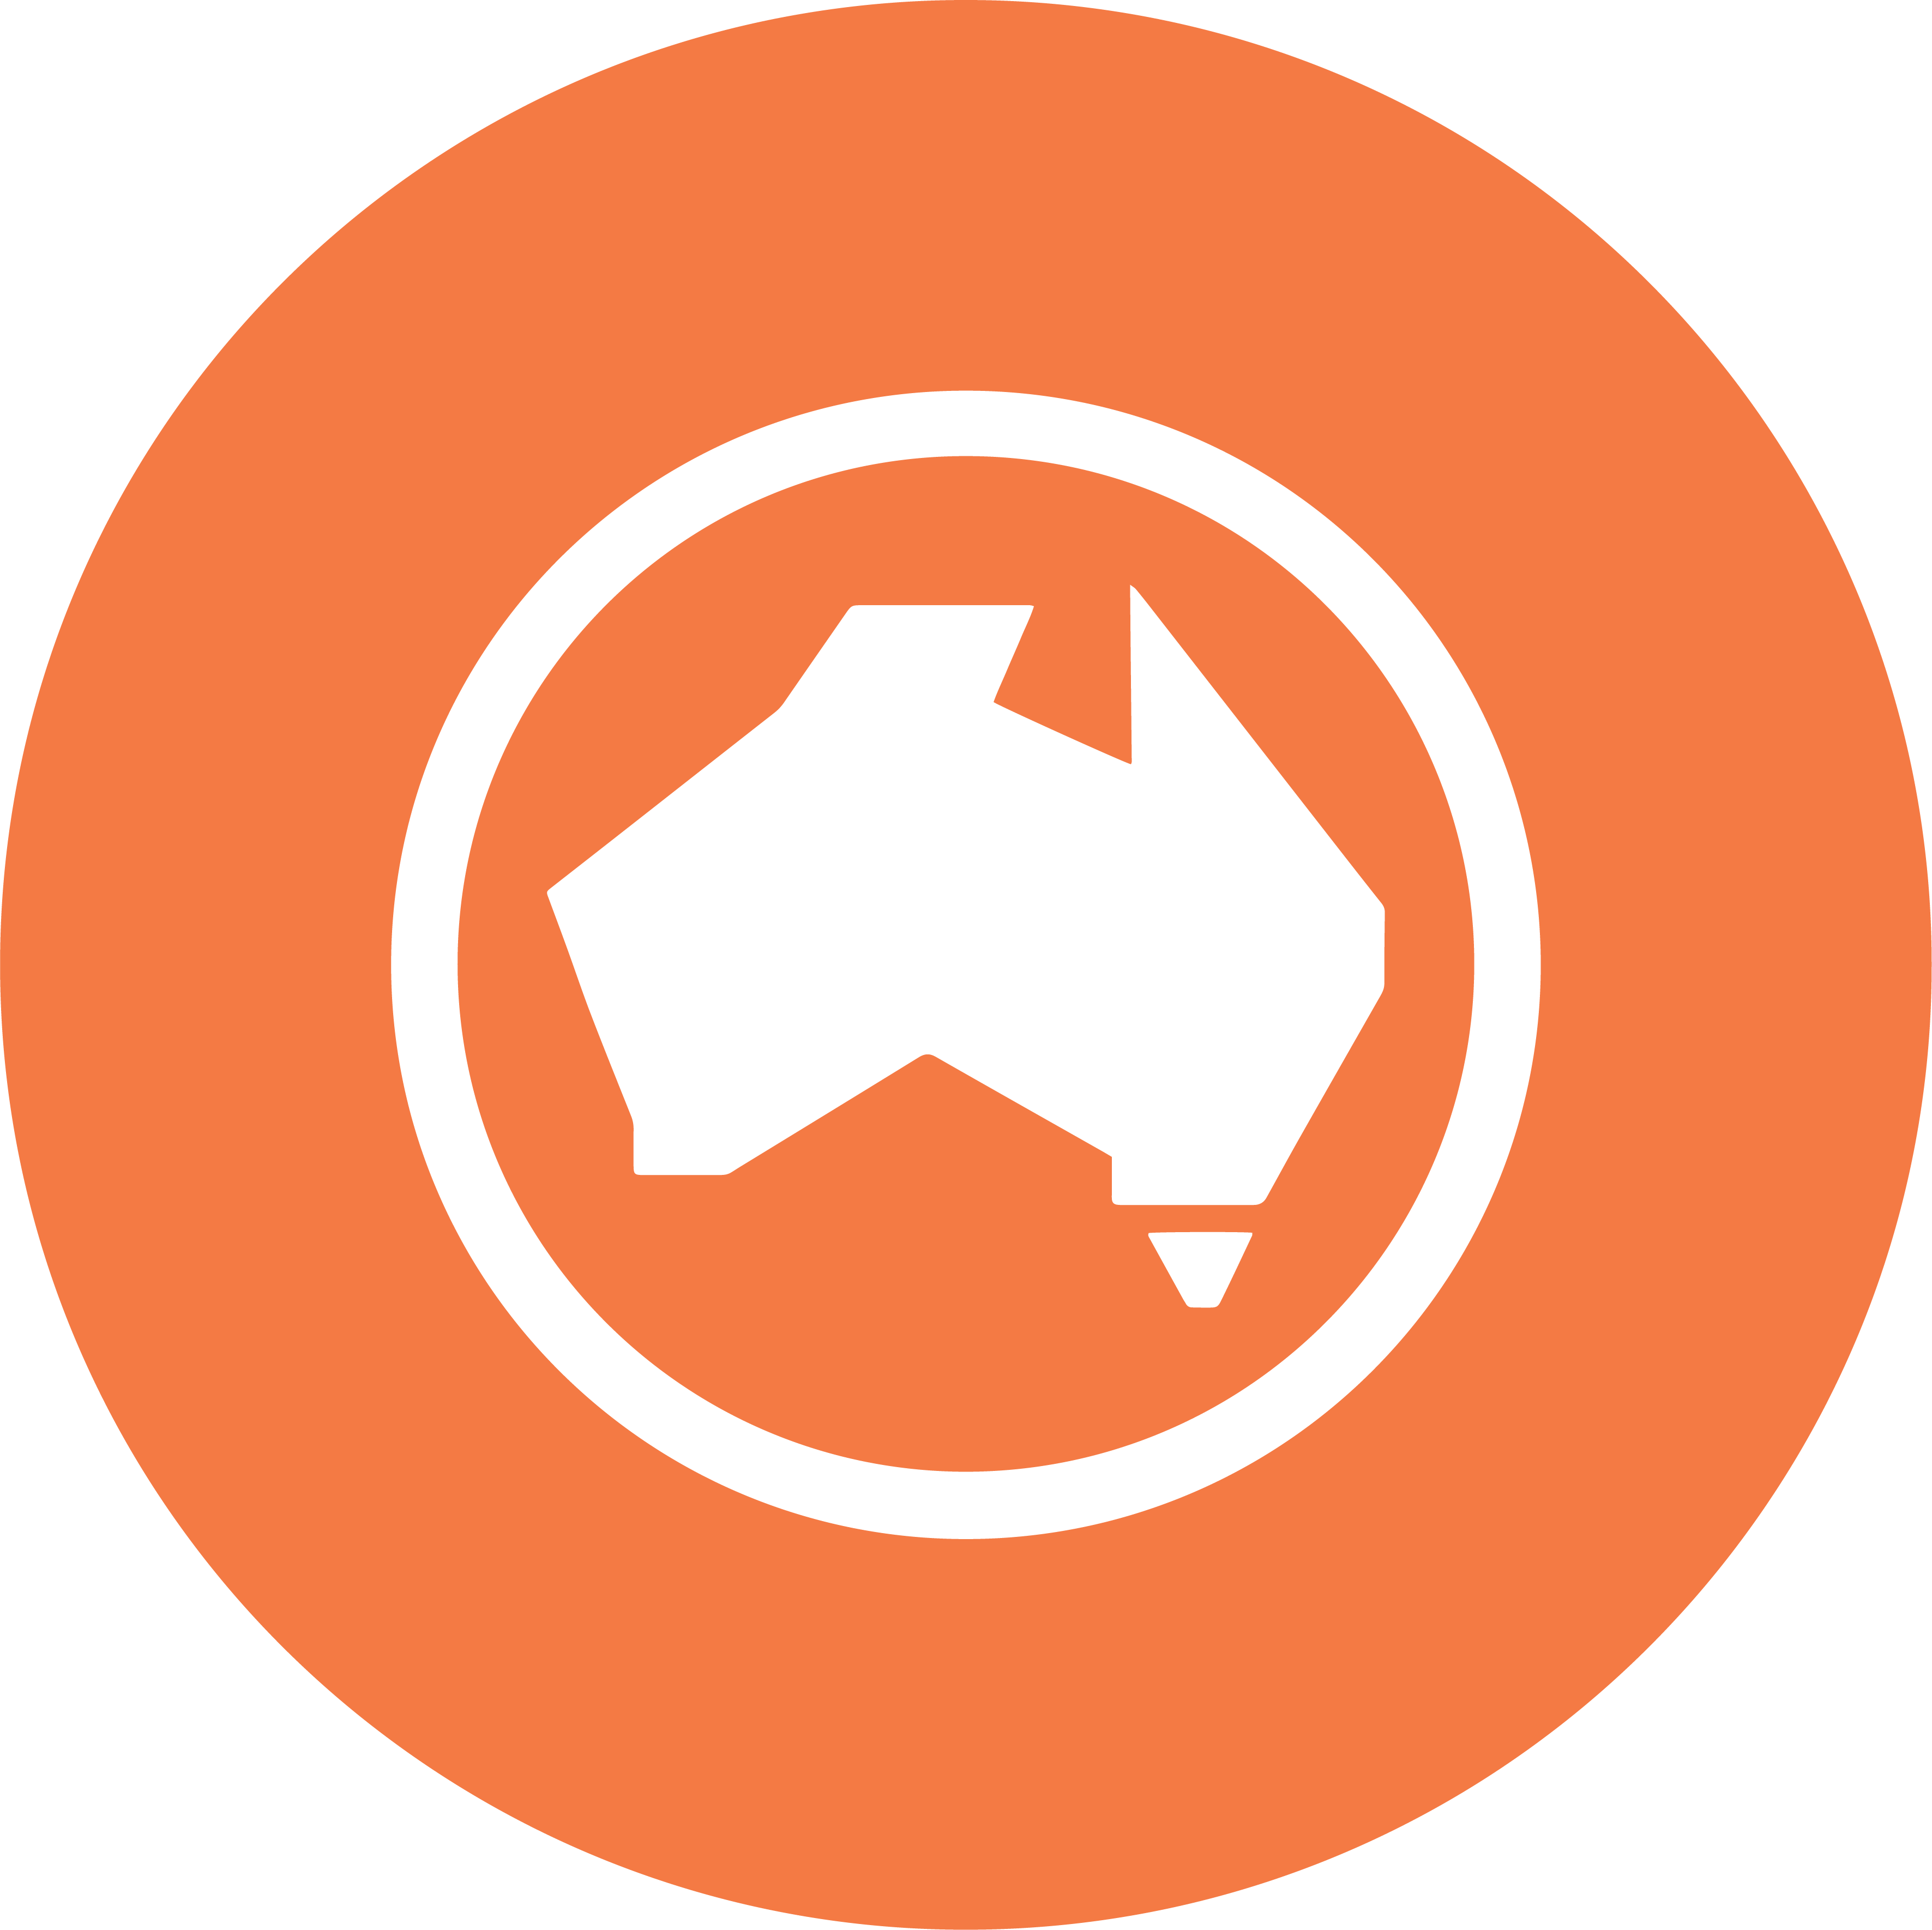 Icon of Australia on orange background